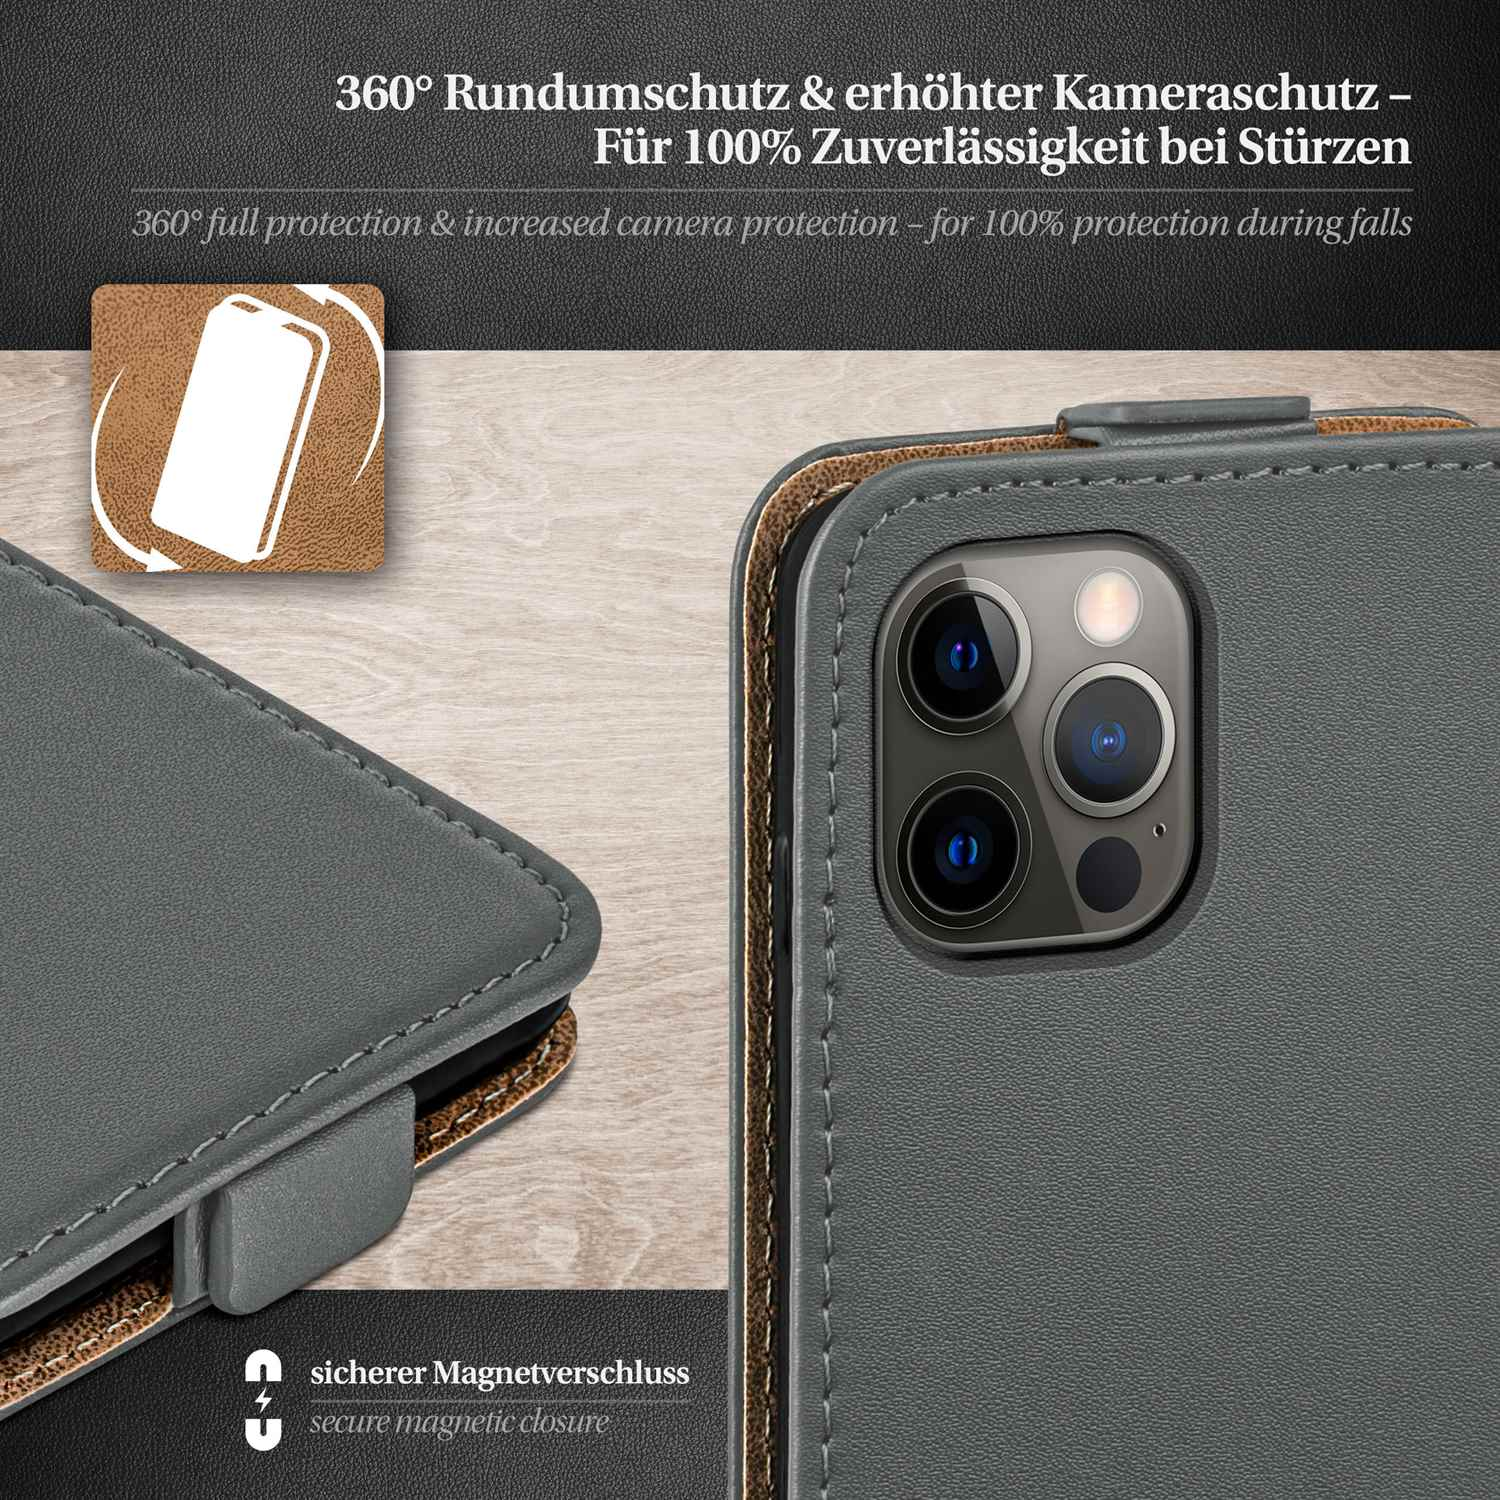 Pro 12 Flip Cover, Flip Apple, Anthracite-Gray iPhone MOEX Case, Max,